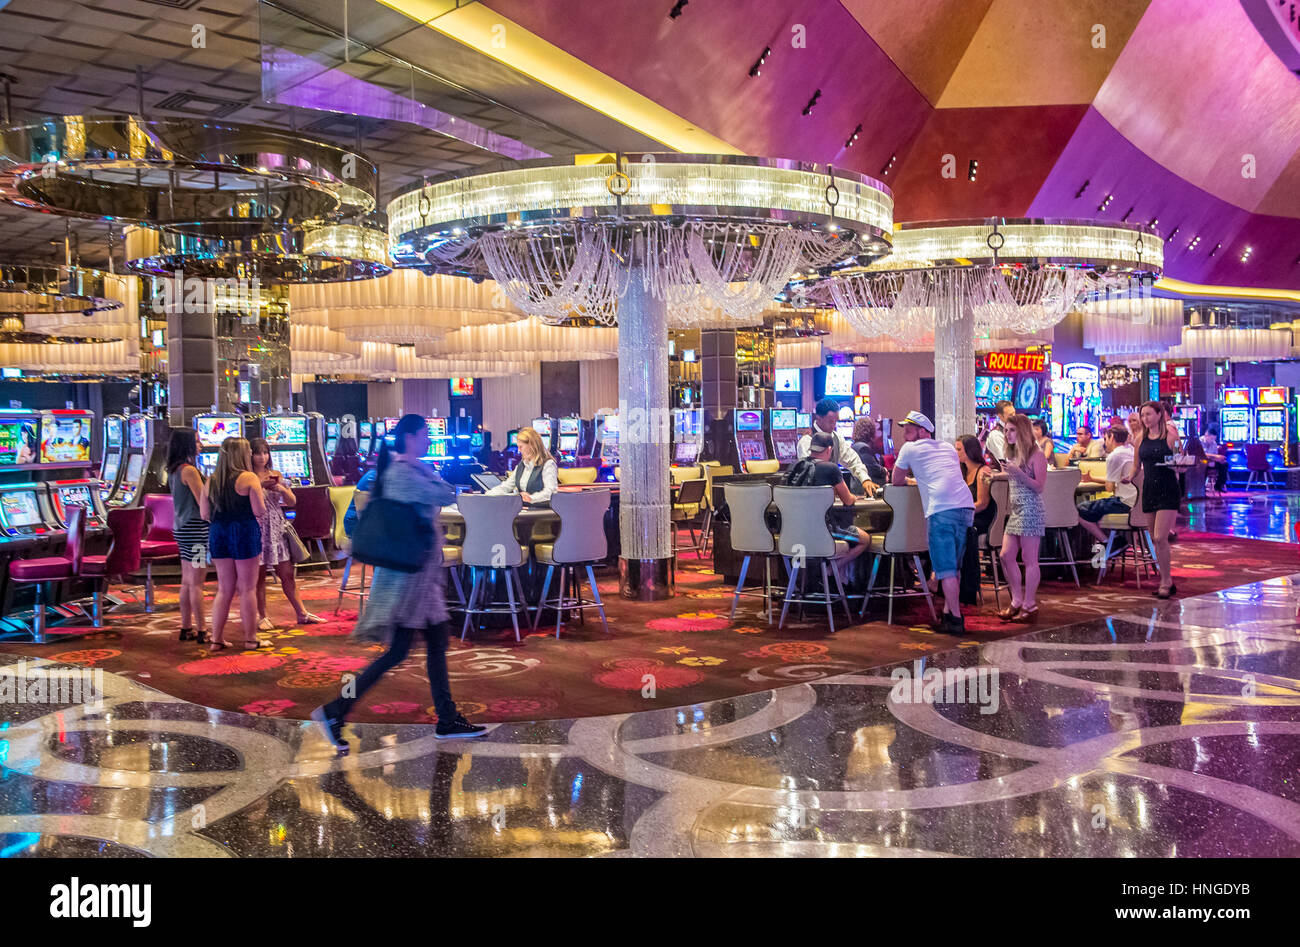 The Cosmopolitan hotel & casino in Las Vegas. The Cosmopolitan opened